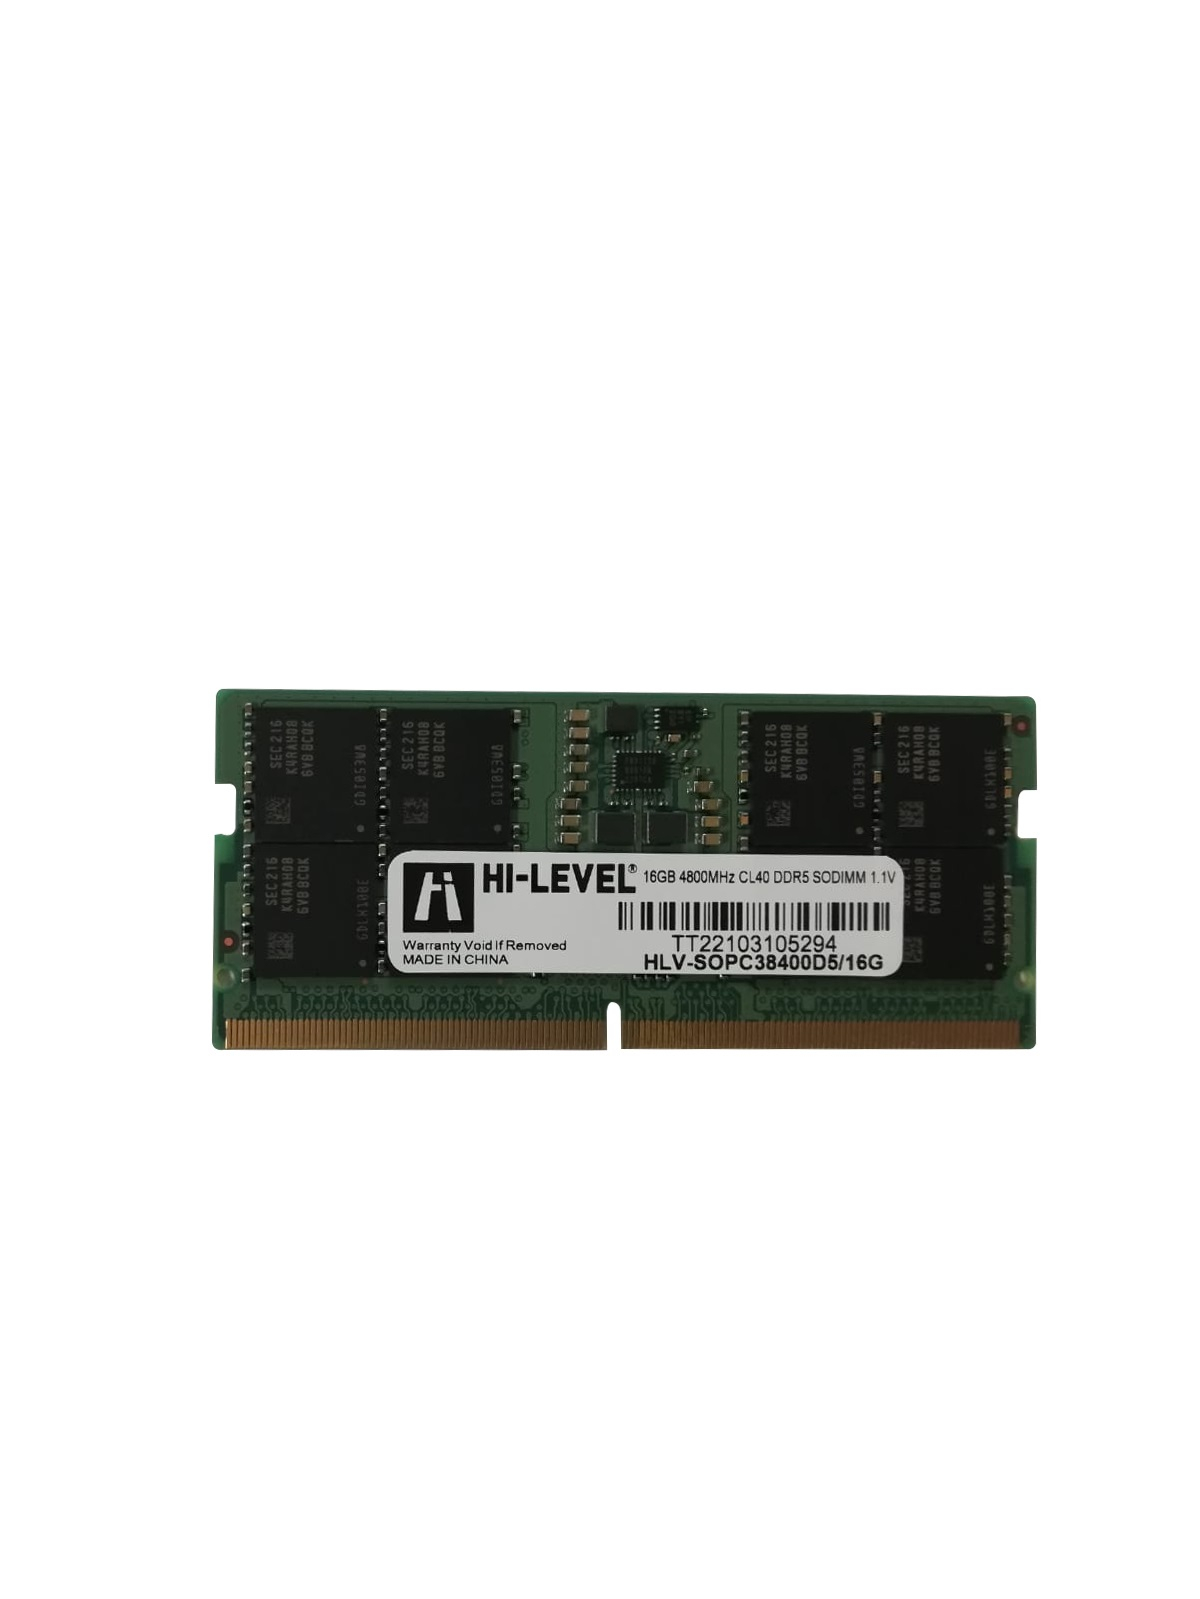 HI-LEVEL DDR5 SODIMM 4800 Mhz 16GB Memory HLV-SOPC38400D5